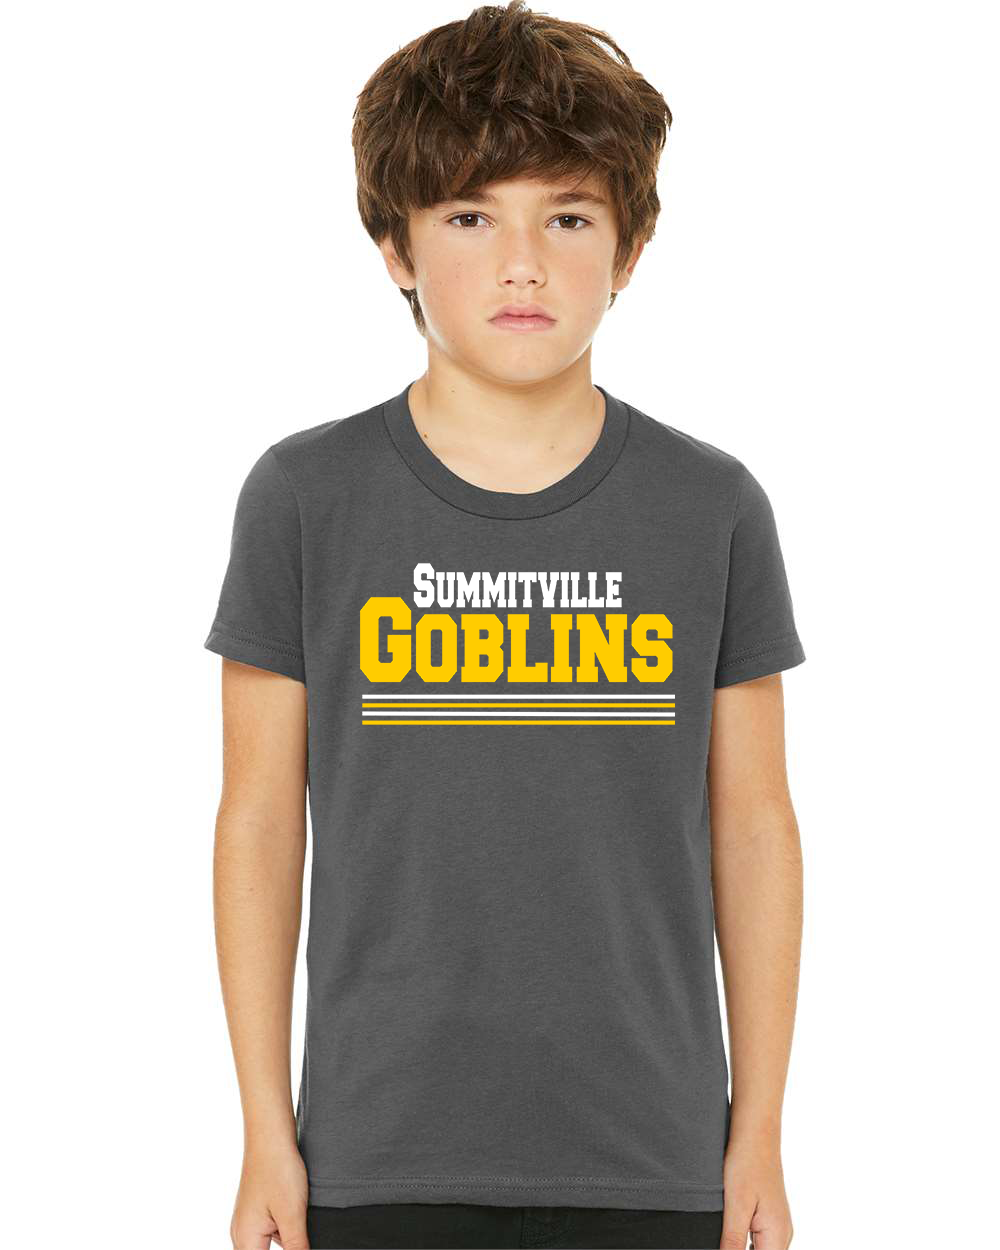 Youth Summitville Goblins Tshirt - Asphalt